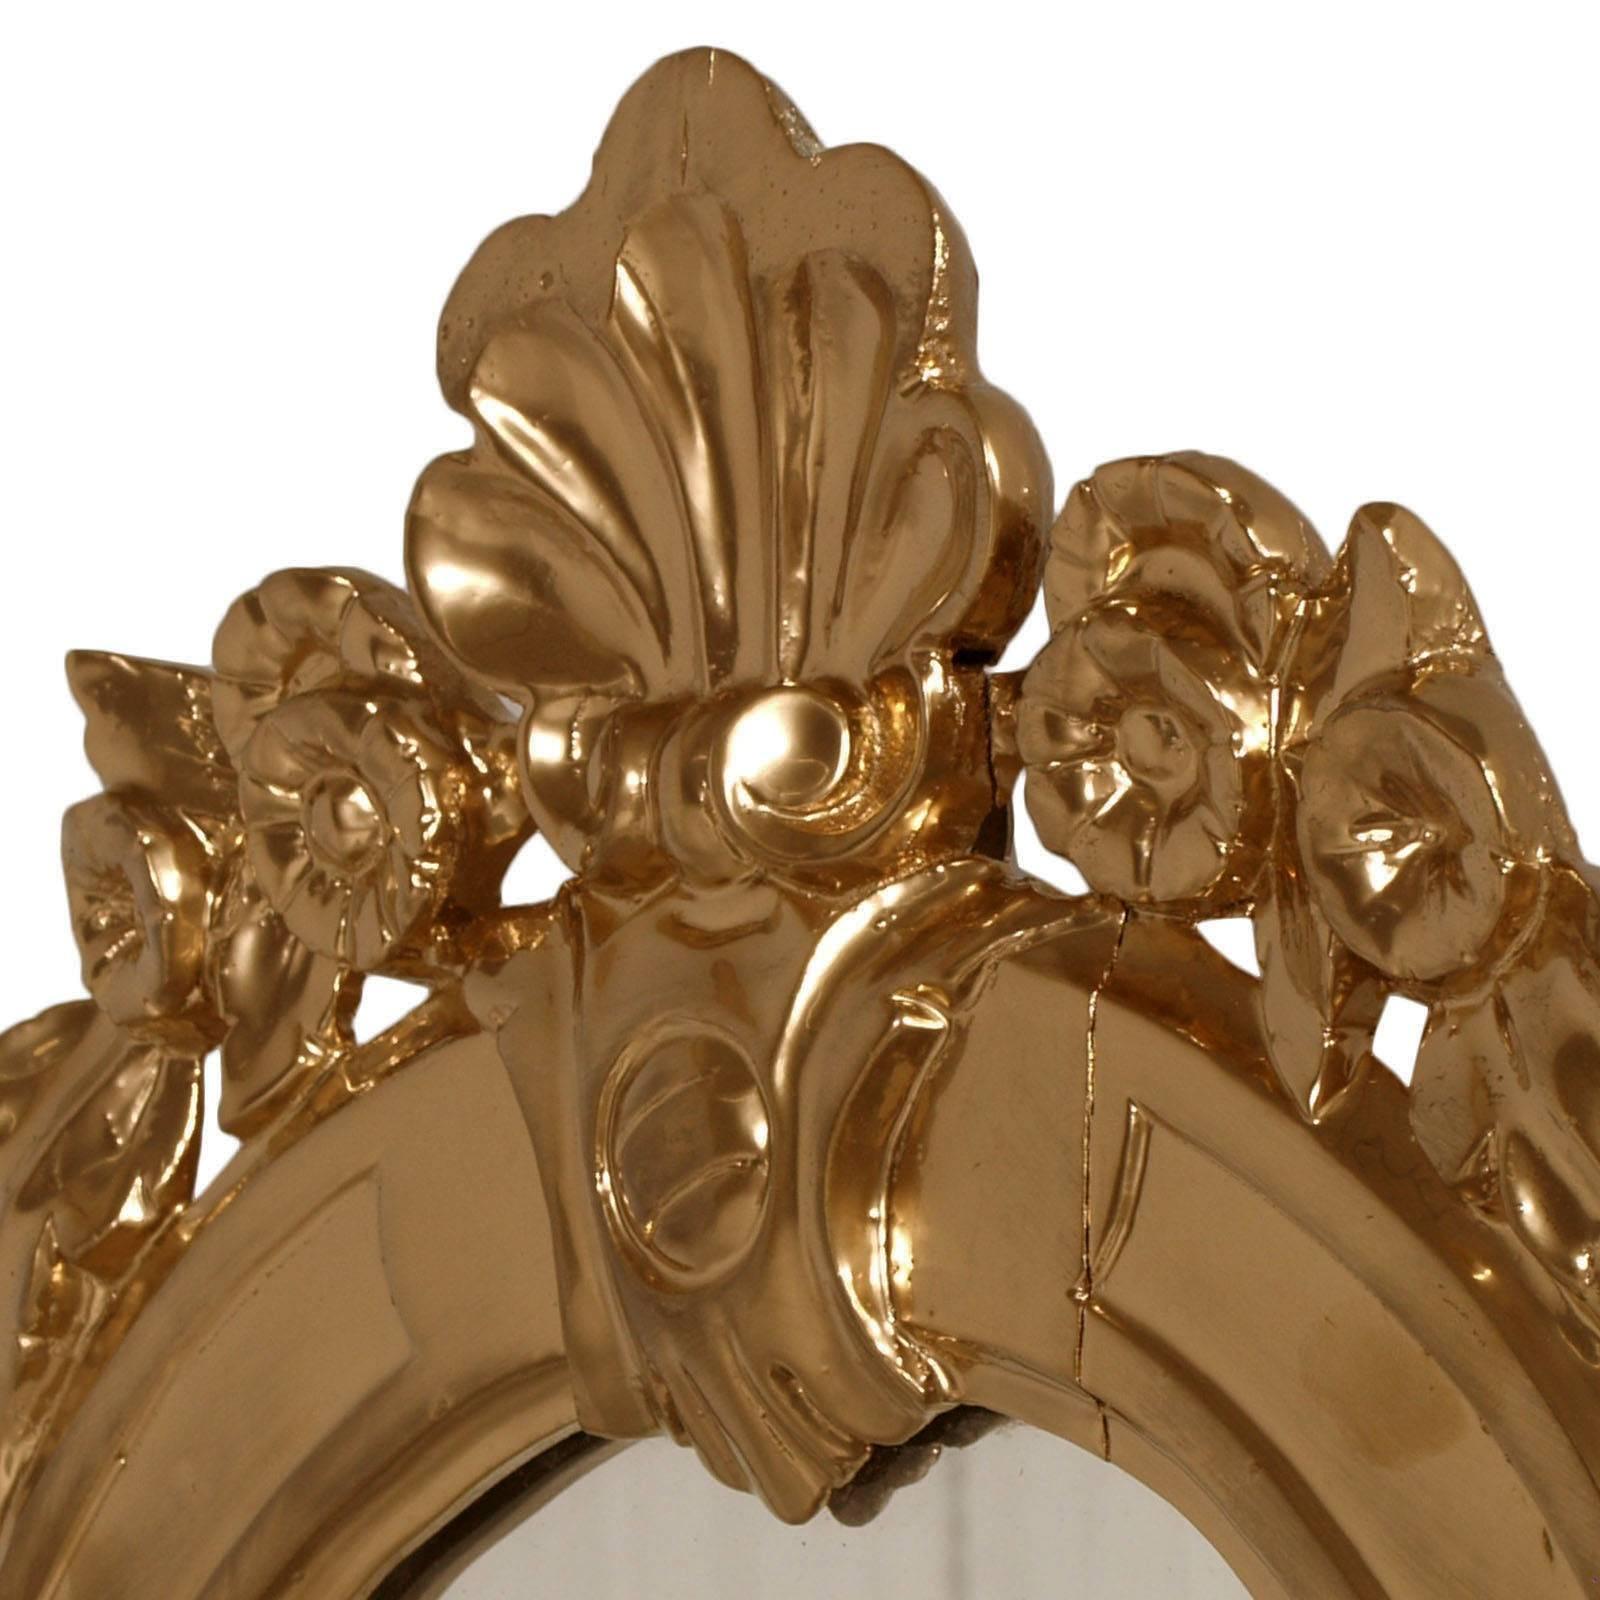 Original antique 18th century Baroque hand-carved gilt walnut gold leaf wall mirror


Measure cm: H 67 x W 48 x D 7.